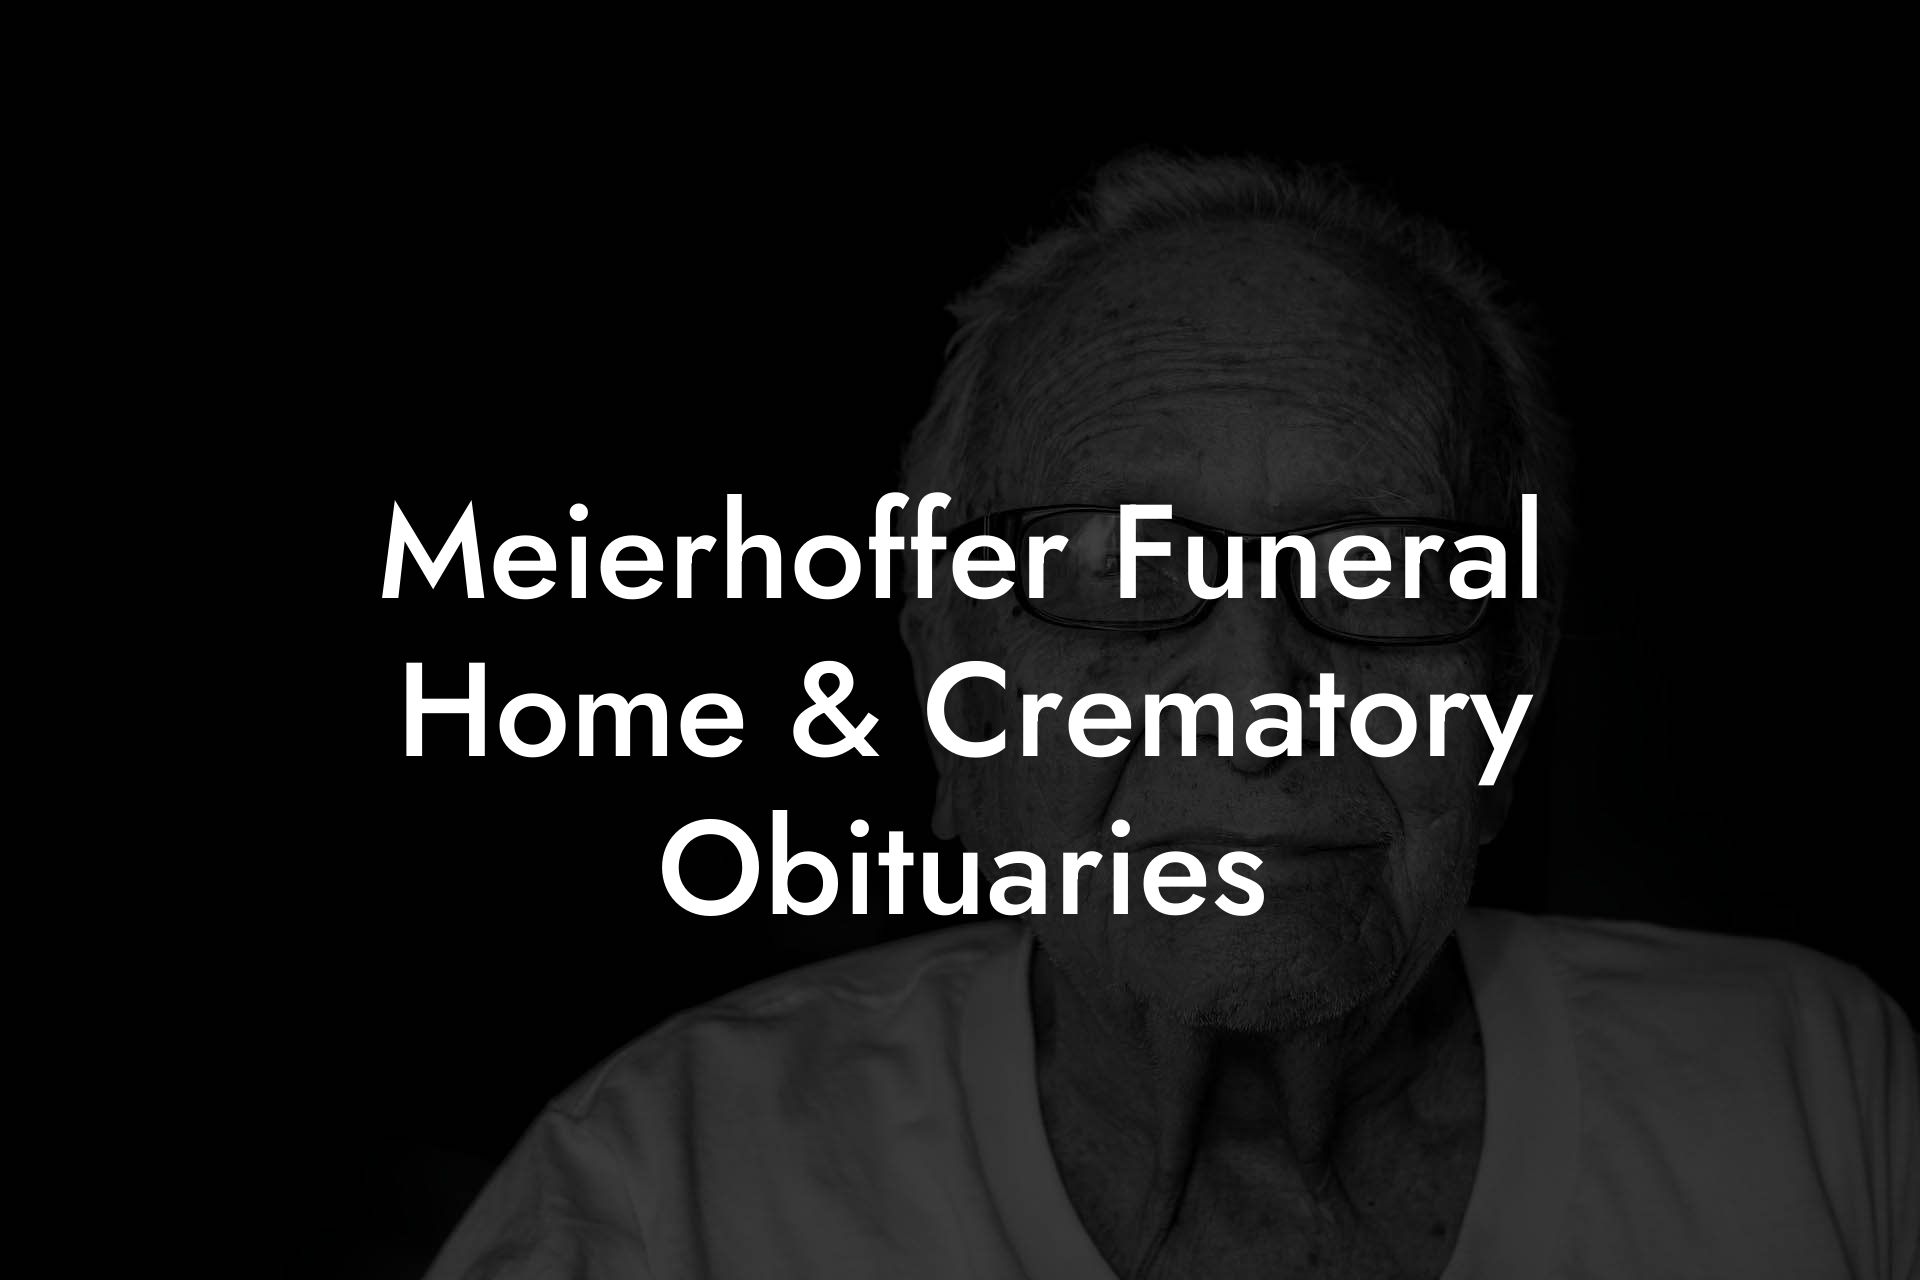 Meierhoffer Funeral Home & Crematory Obituaries